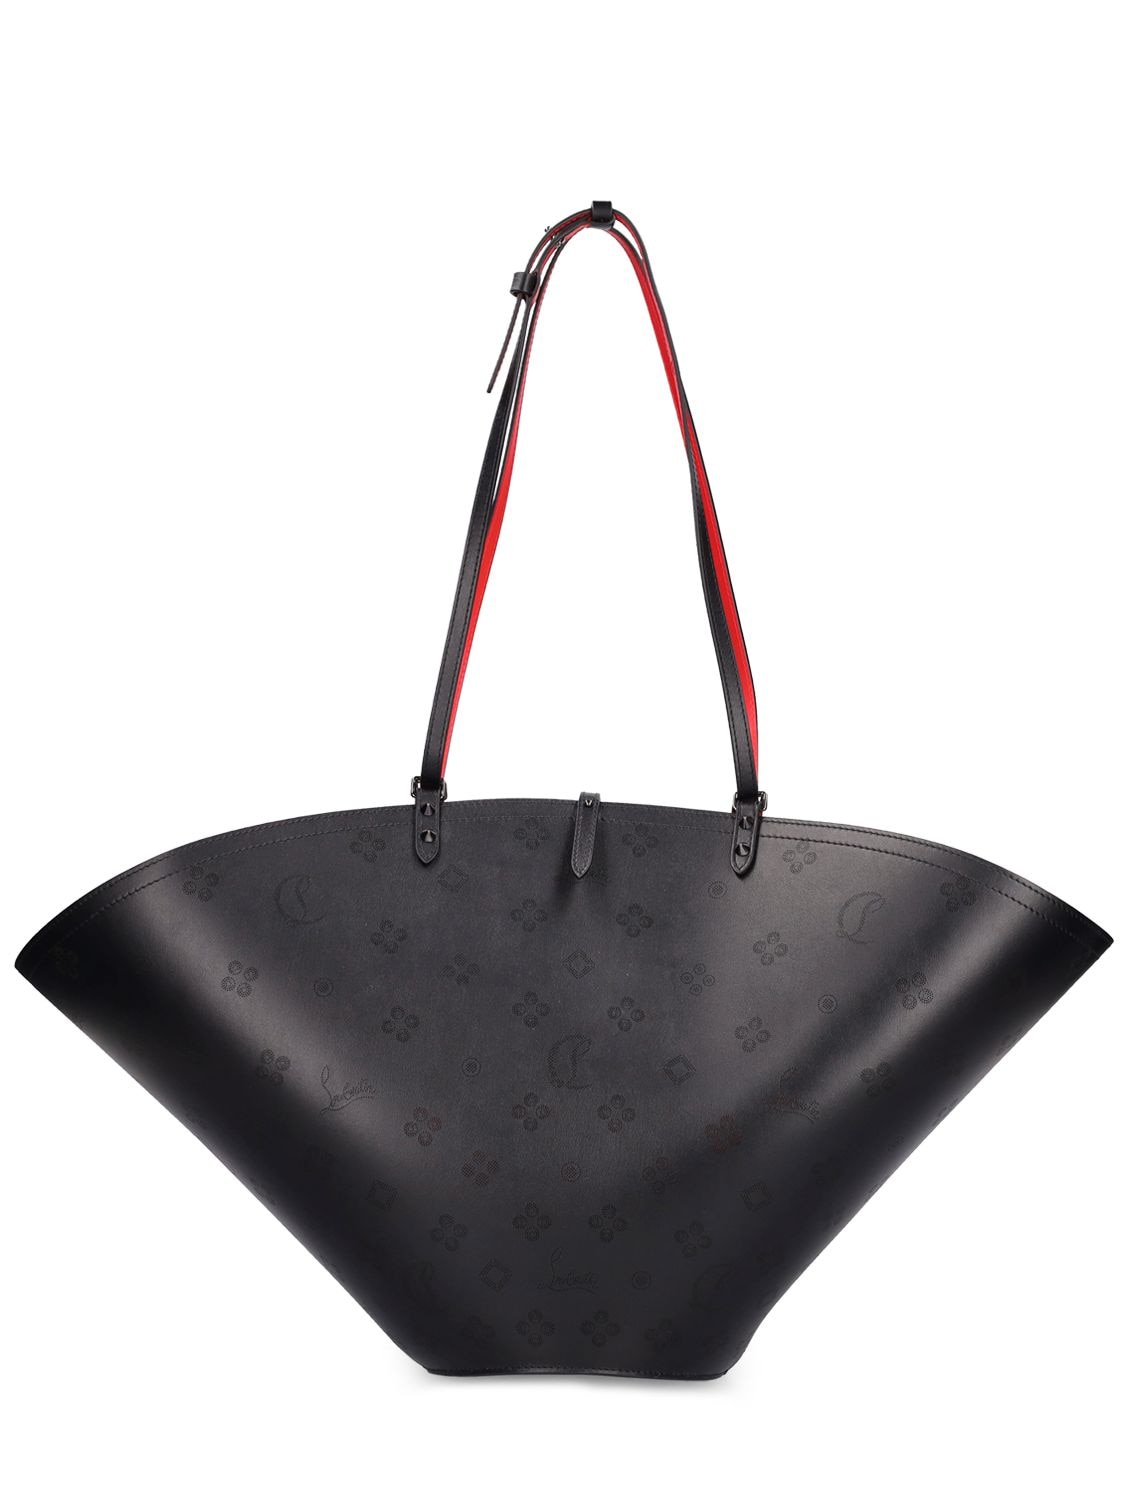 Image of Loubifever Paris Leather Tote Bag